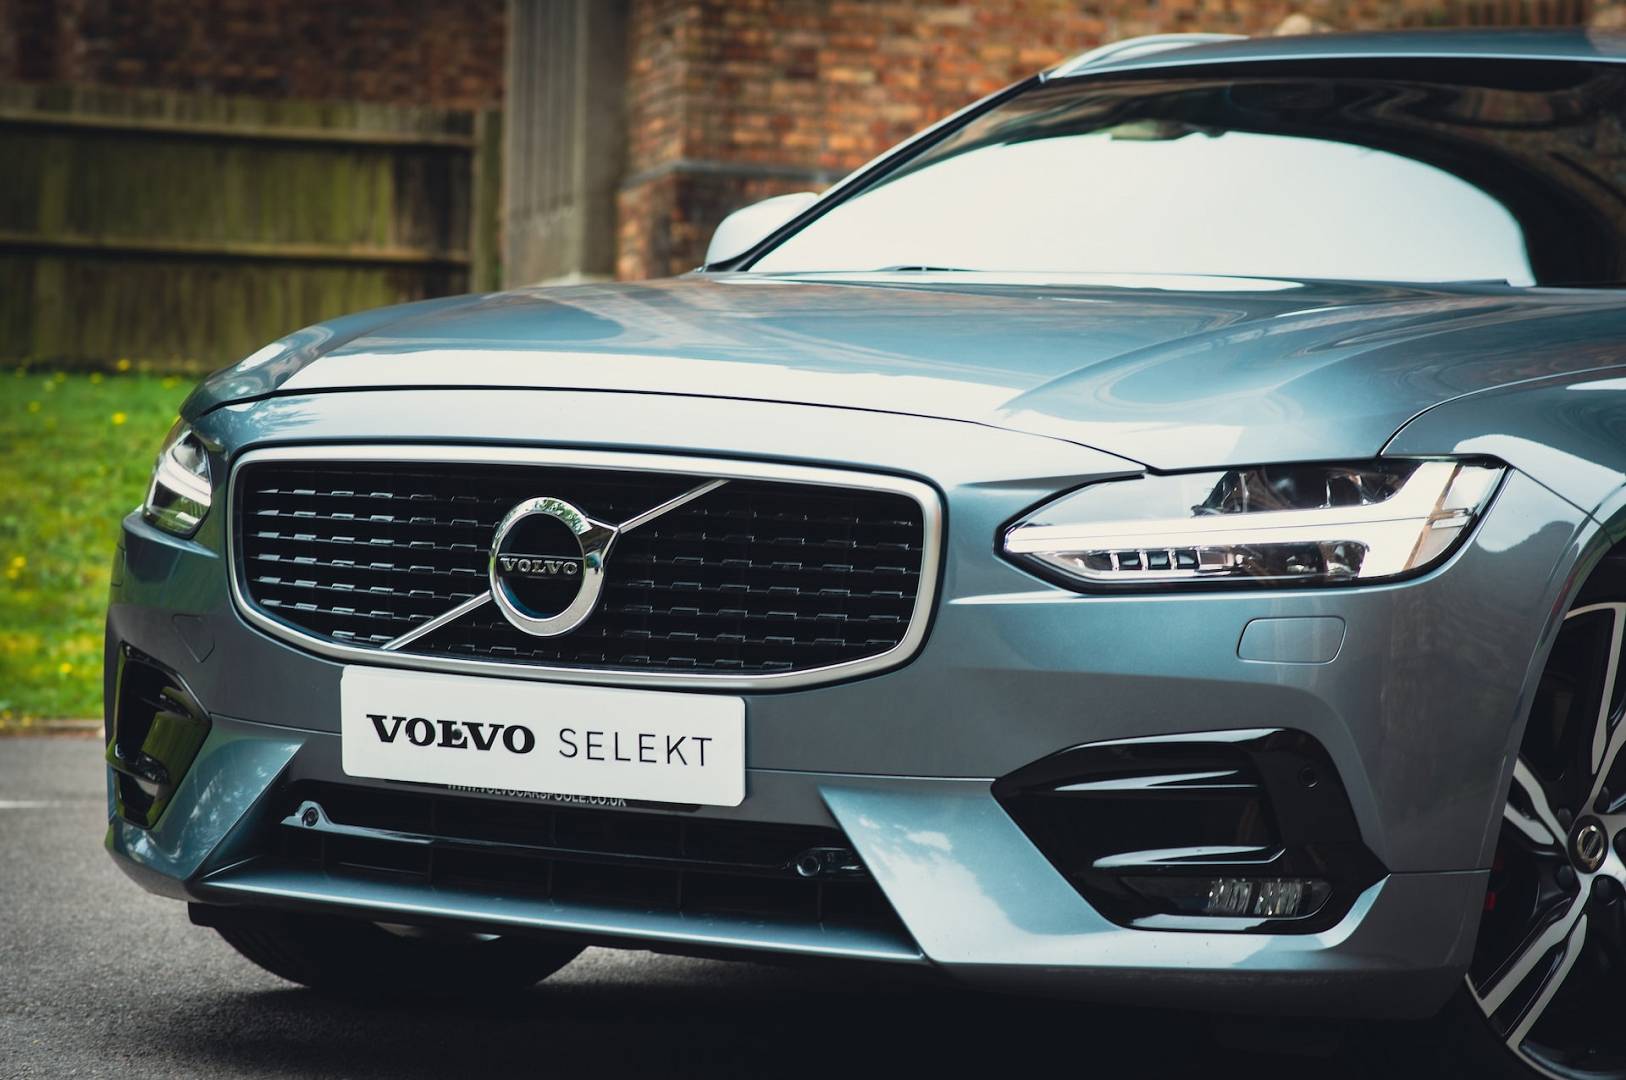 Co obejmuje gwarancja Volvo Selekt?